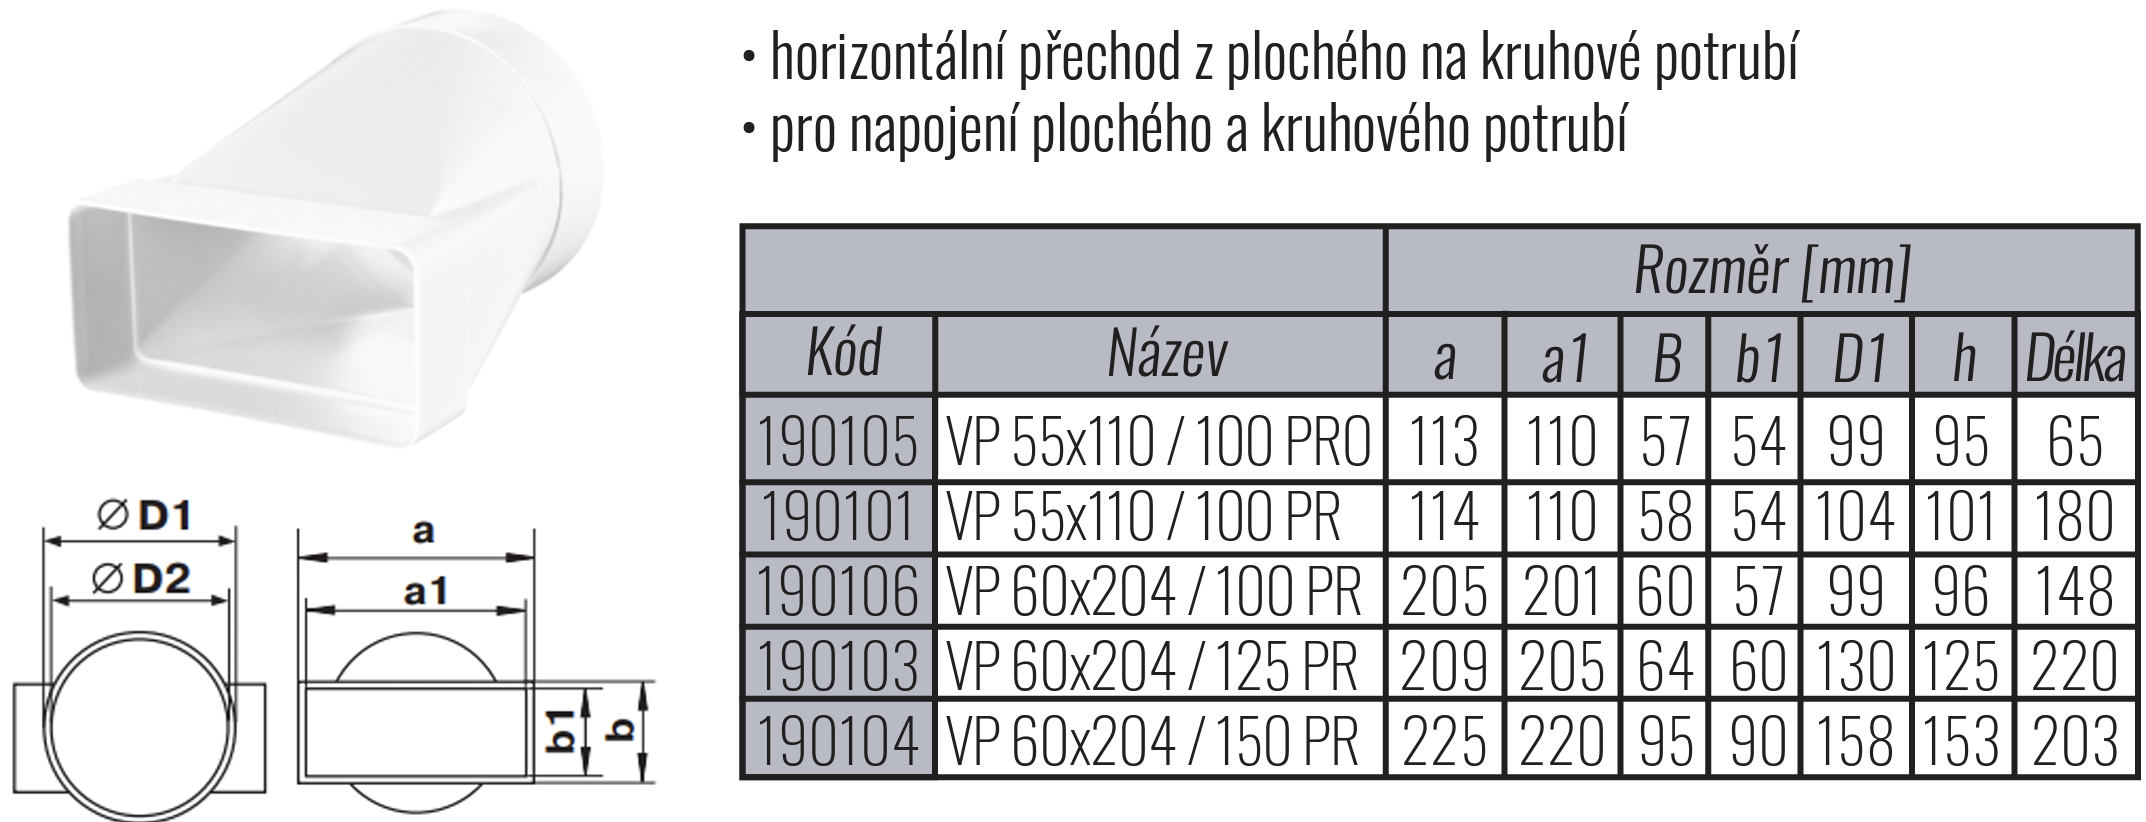 plastovy_horizontalni_prechod_z_plocheho_na_kruhove_potrubi_ventilaplast